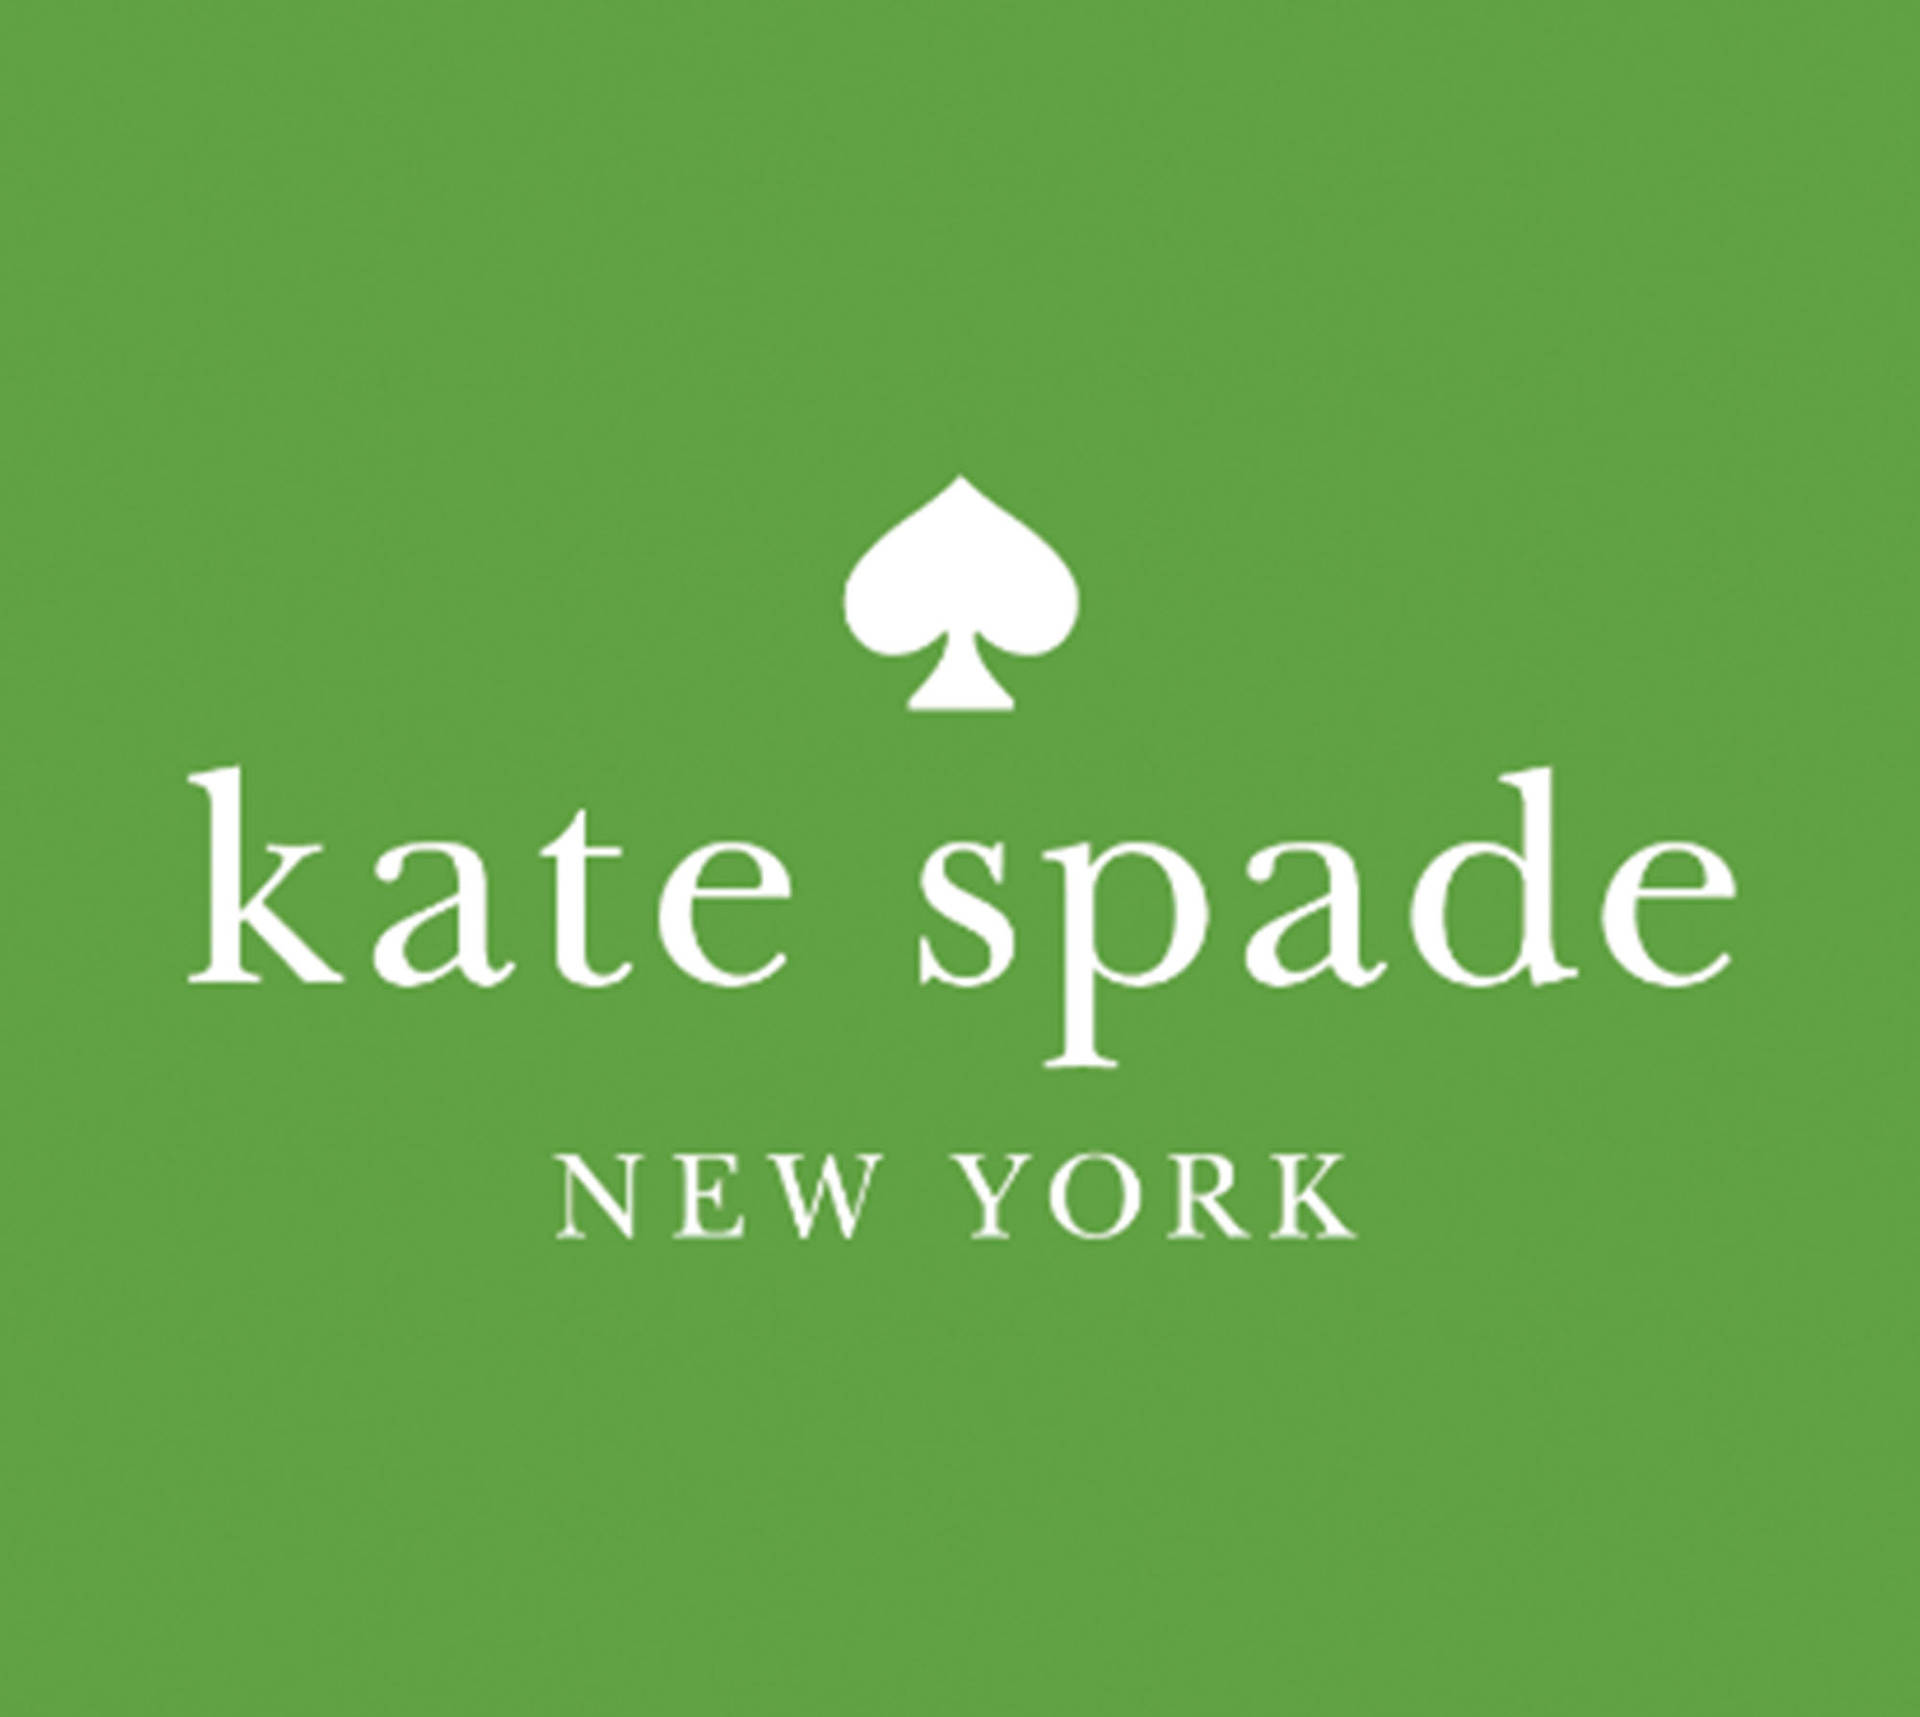 Kate Spade New York Green Poster Wallpaper